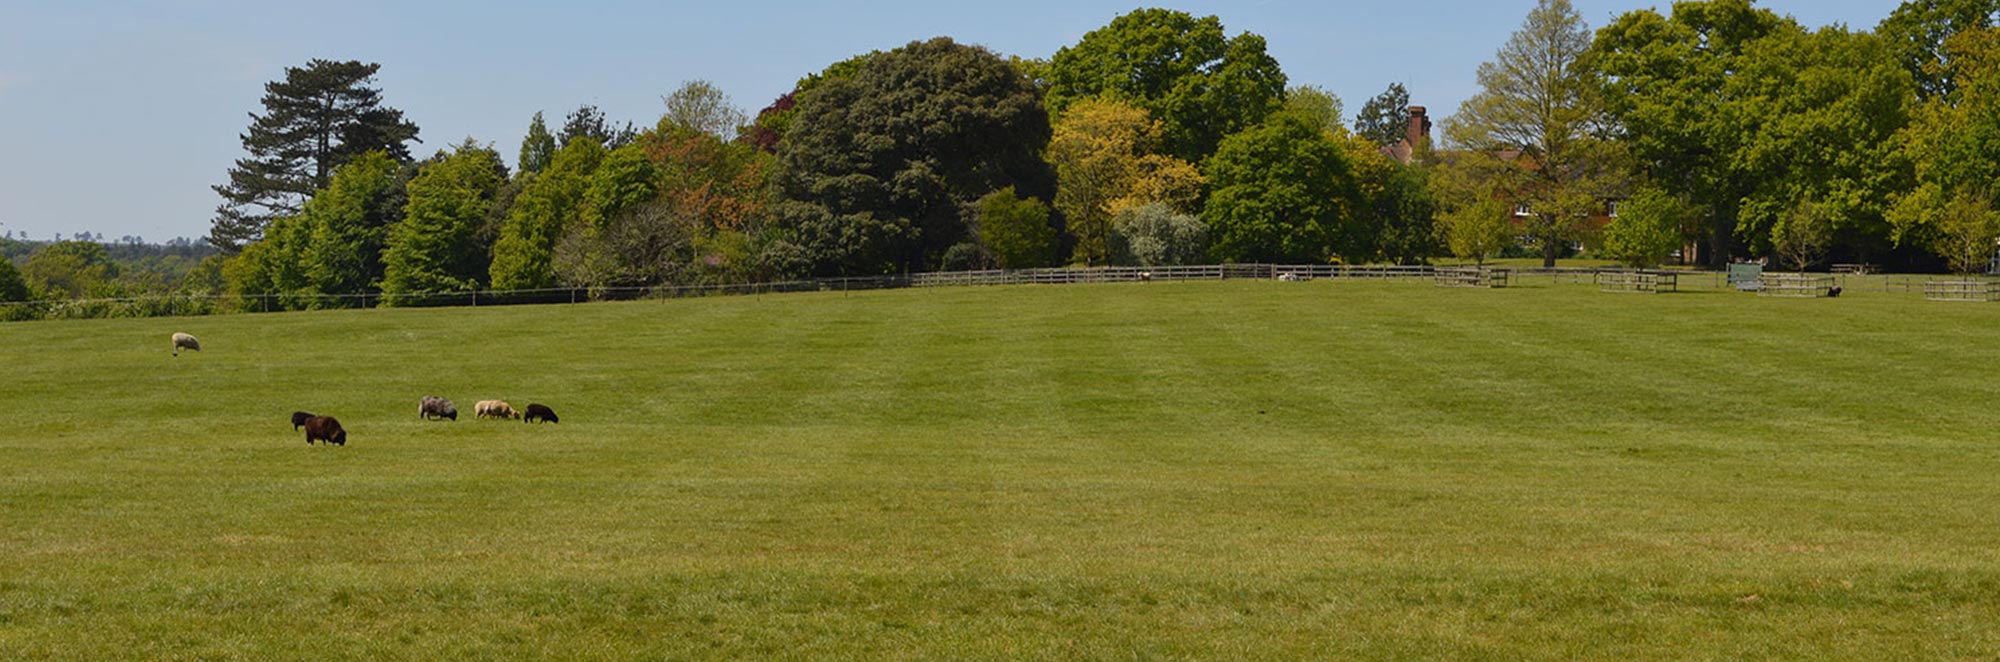 Park Field, near Guildford 